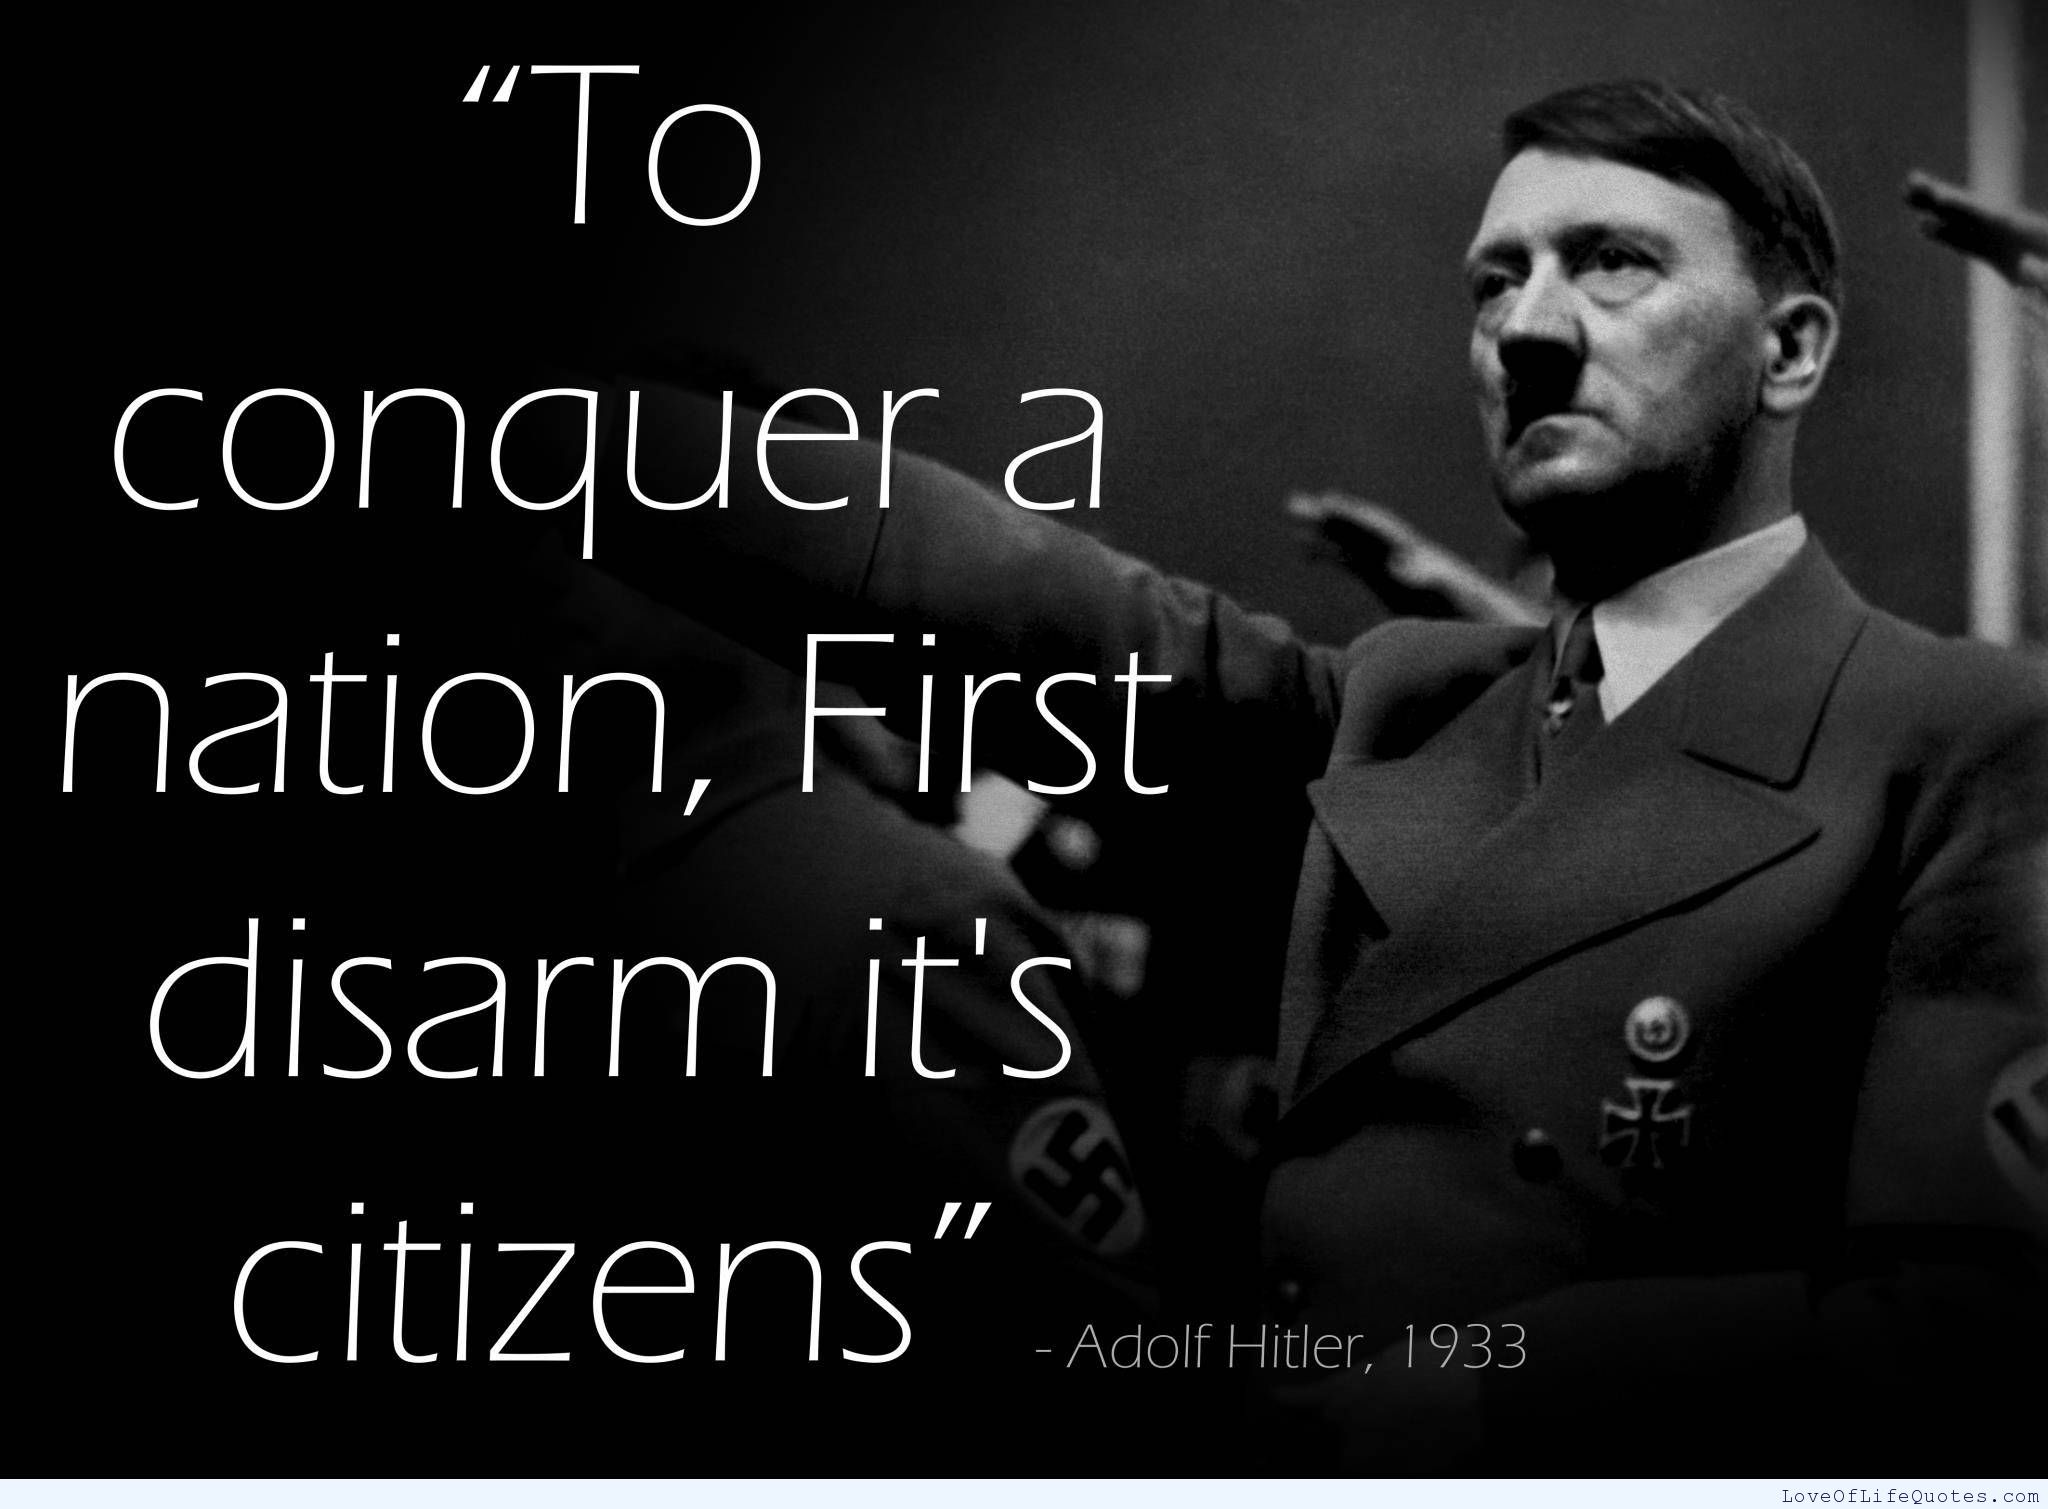 Adolf hitler quotes